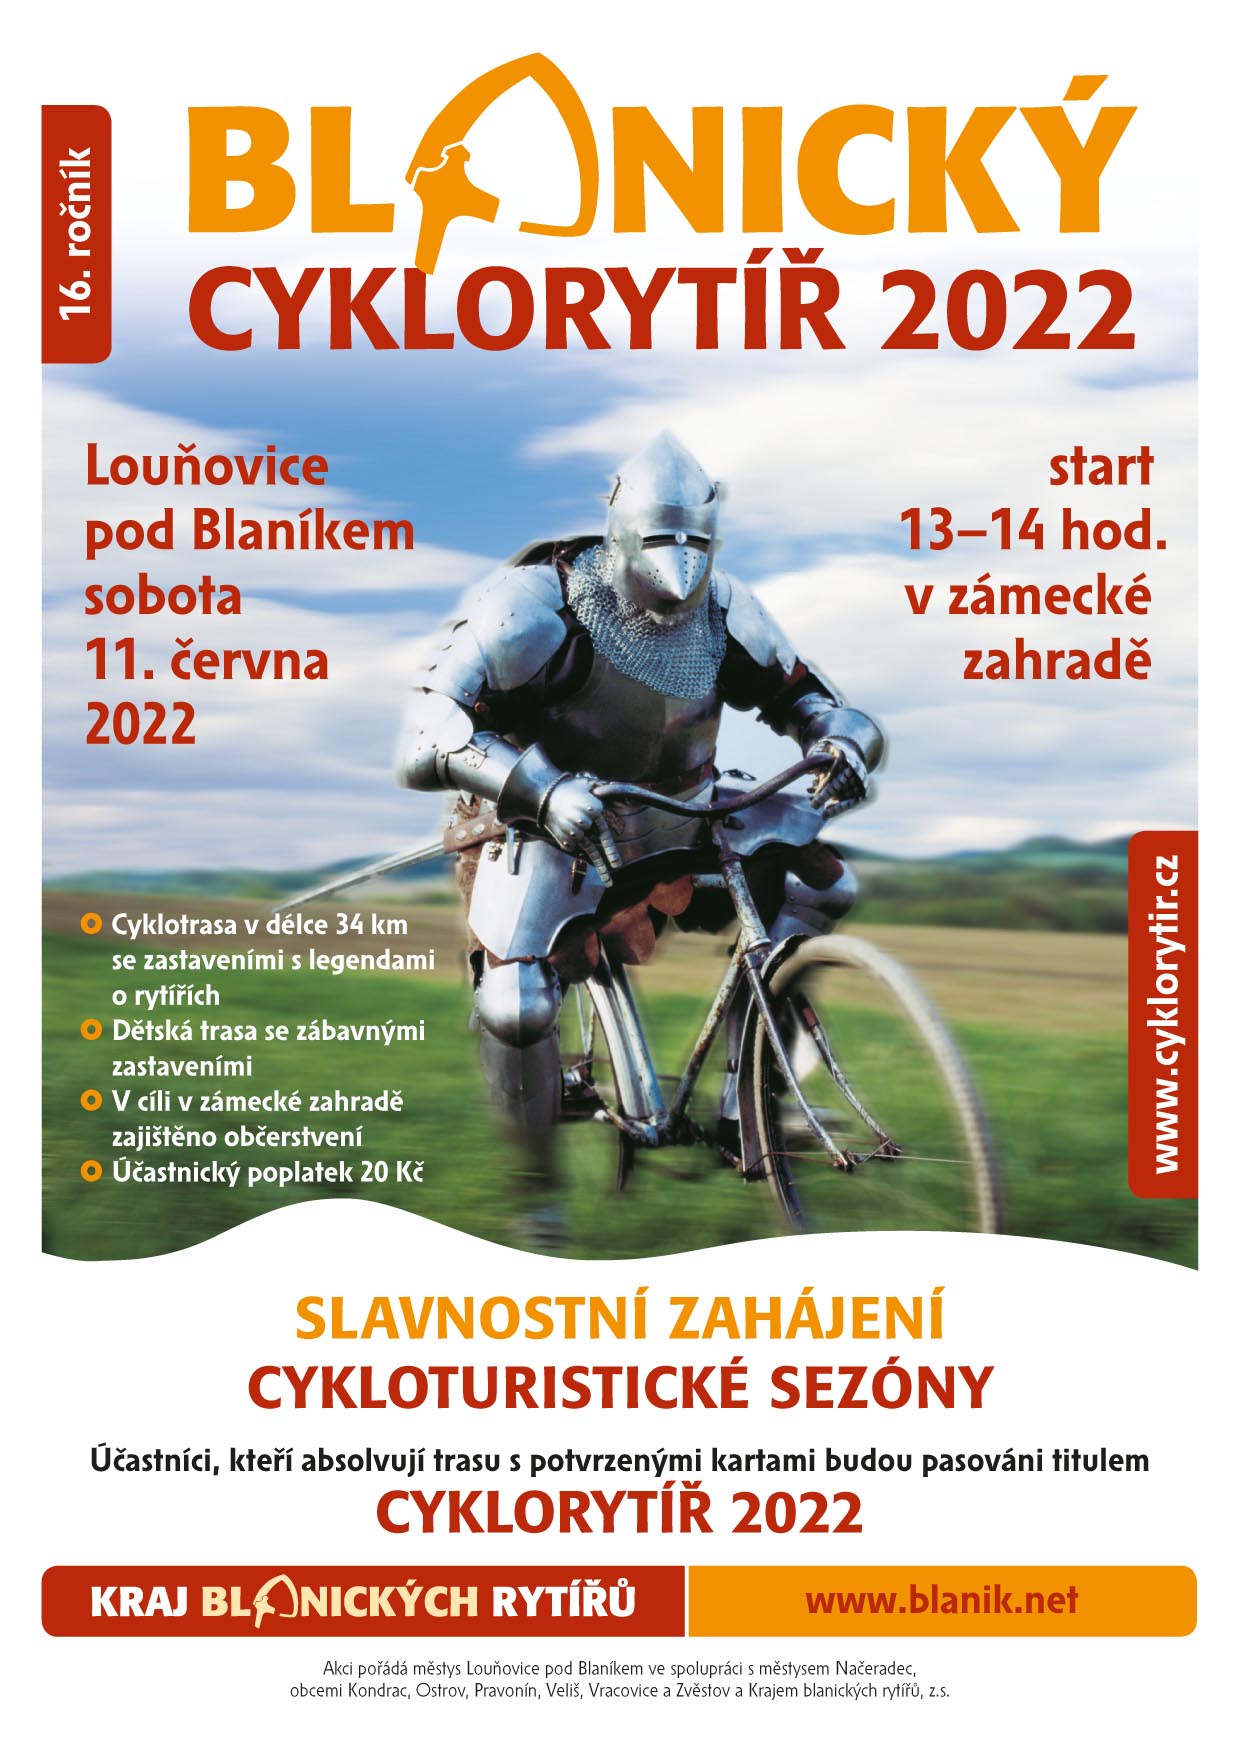 blanicky cyklorytir 2022